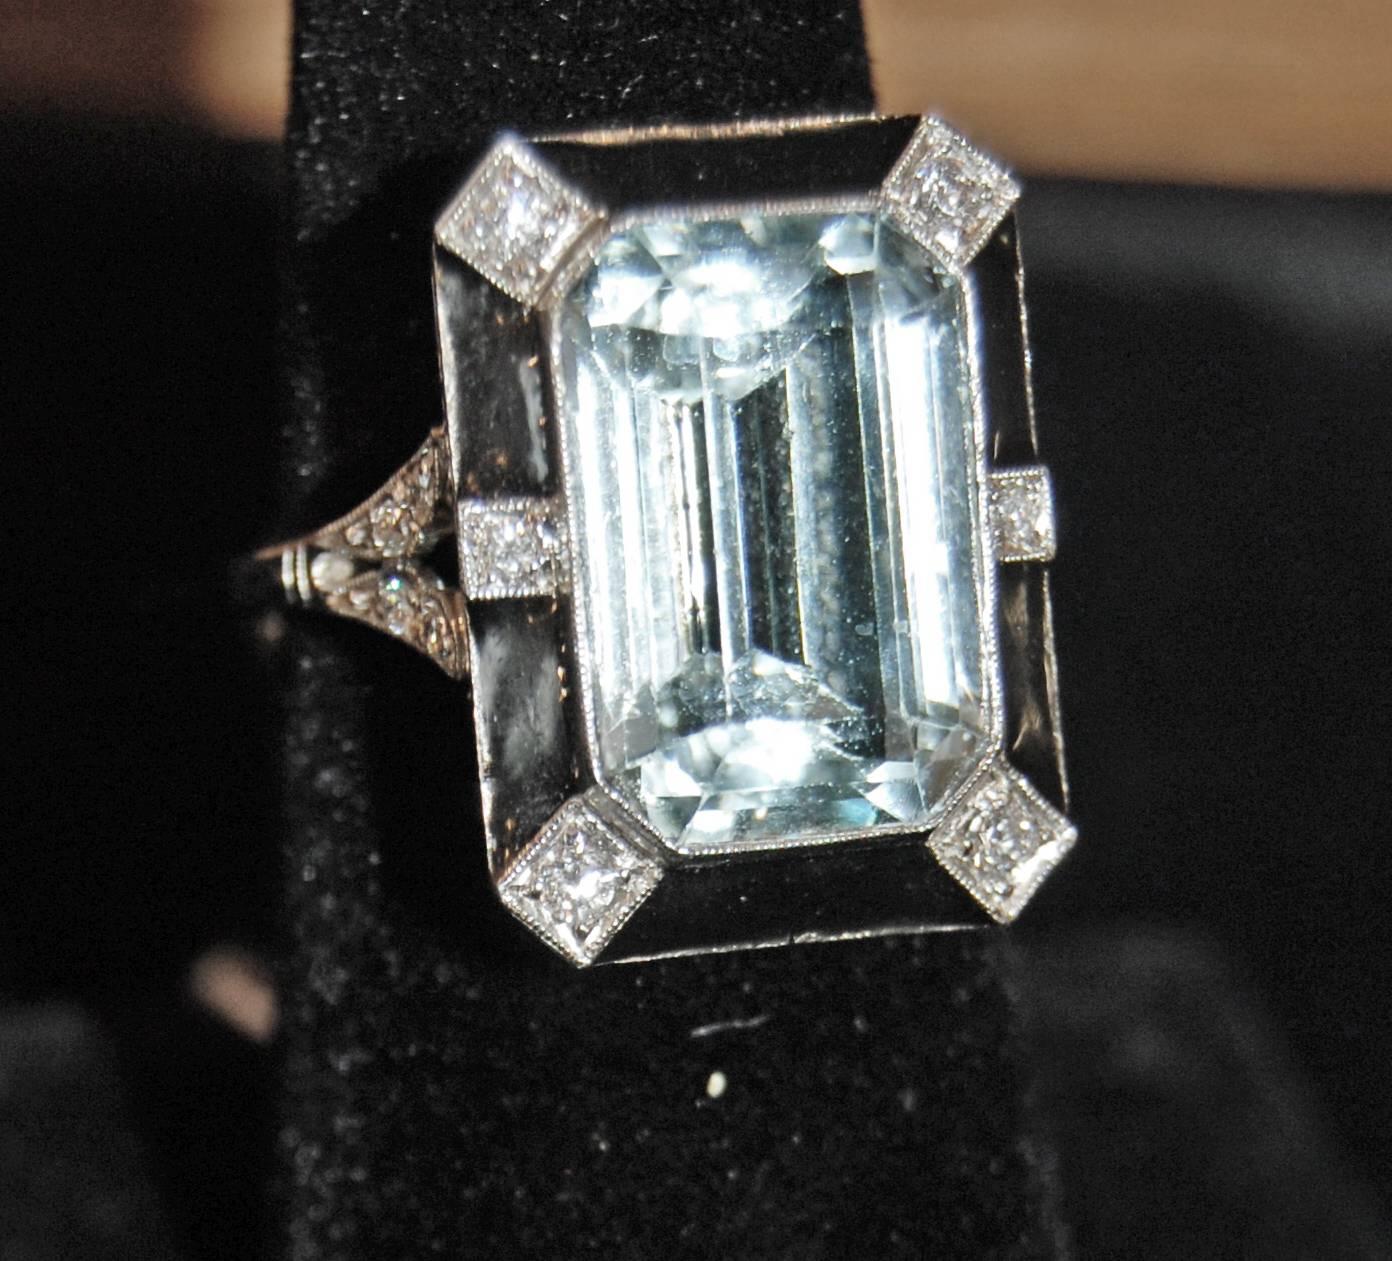 12 Carat Aquamarine set in Platinum with Natural Onyx and Full Cut Diamonds
.85 carat diamonds
.70 Natural Onyx
Size-8